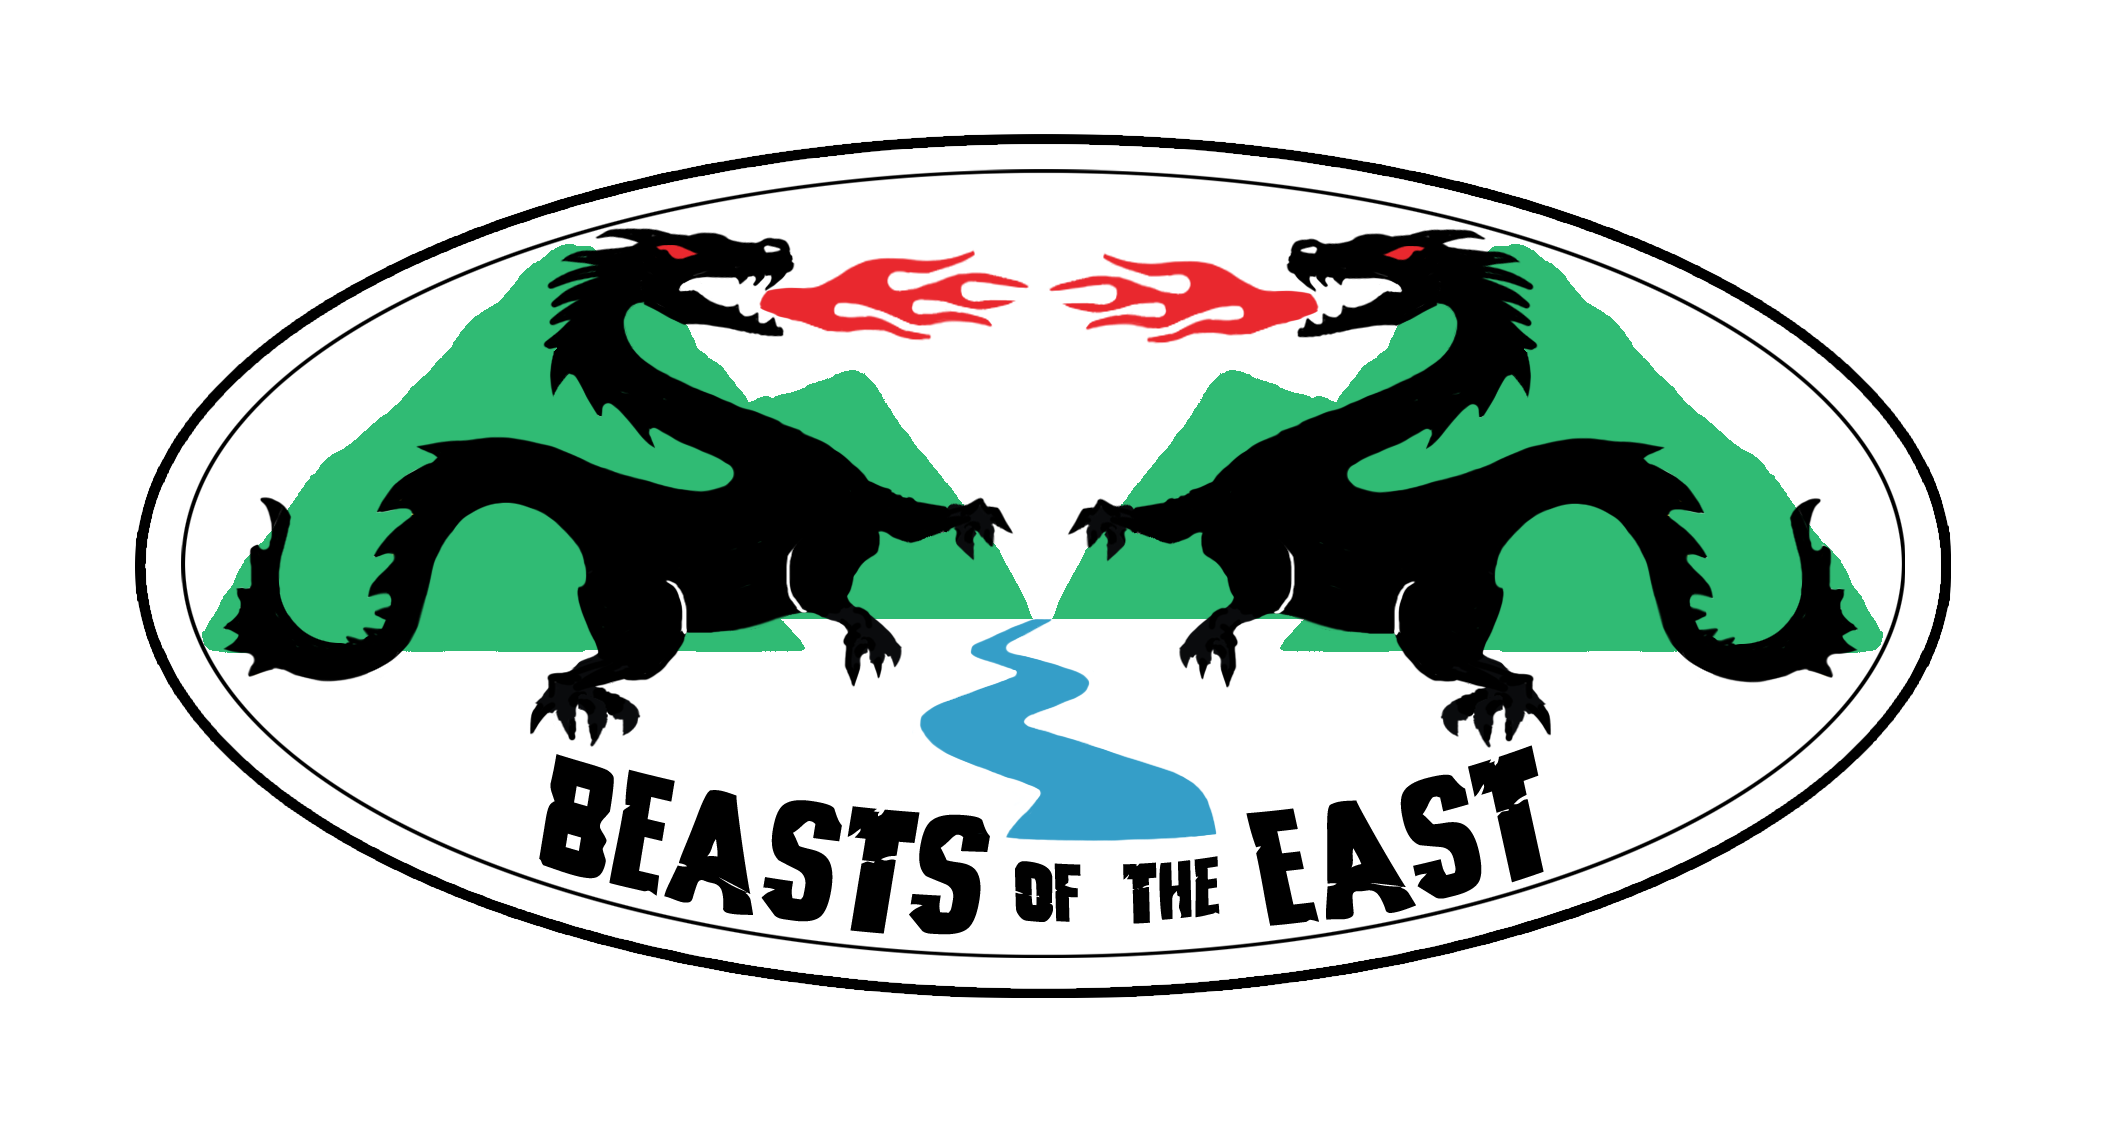 Eastern Section AAPG 2017 Meeting Logo